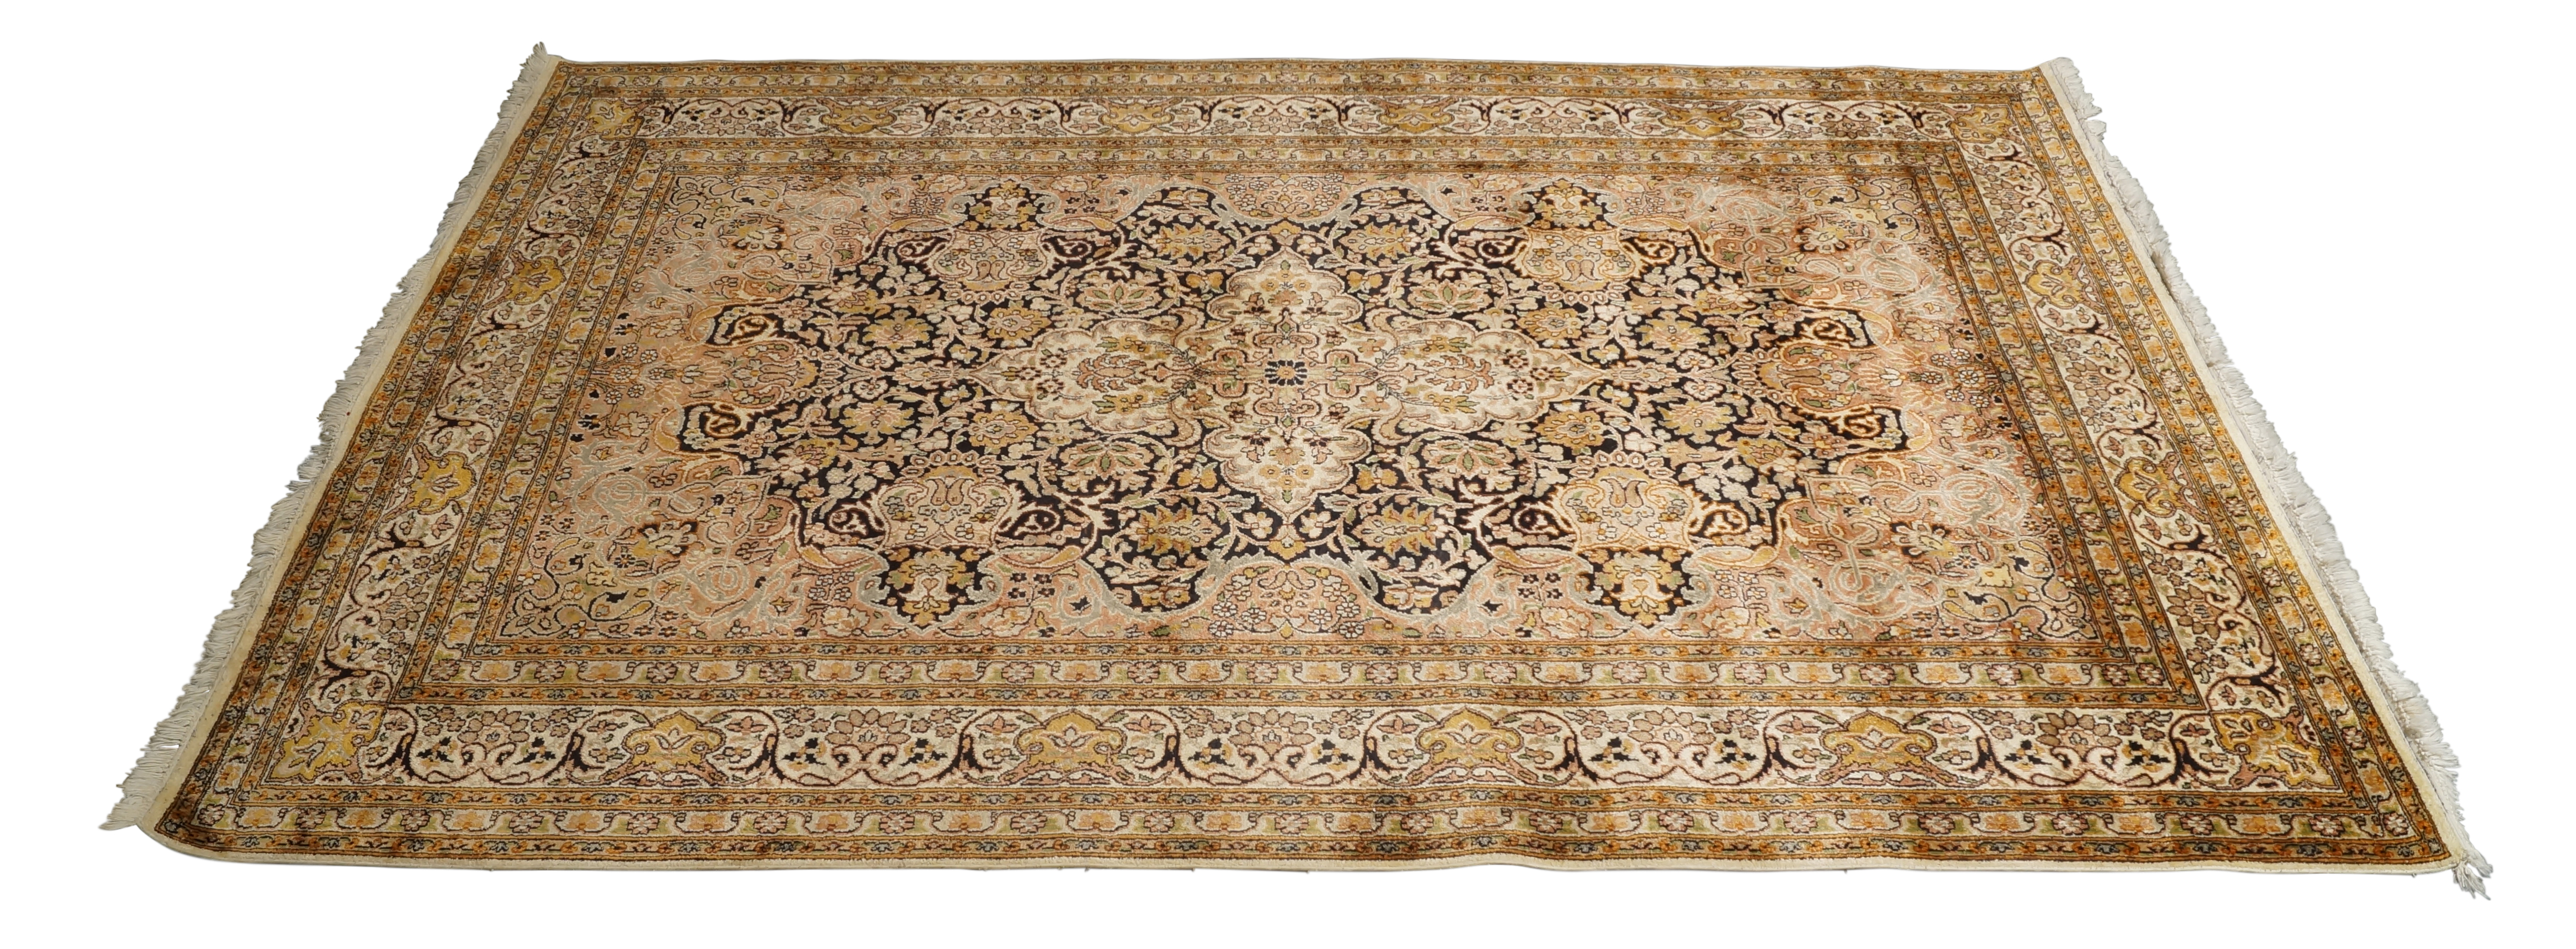 A Persian Hamadan part silk rug - Image 2 of 4